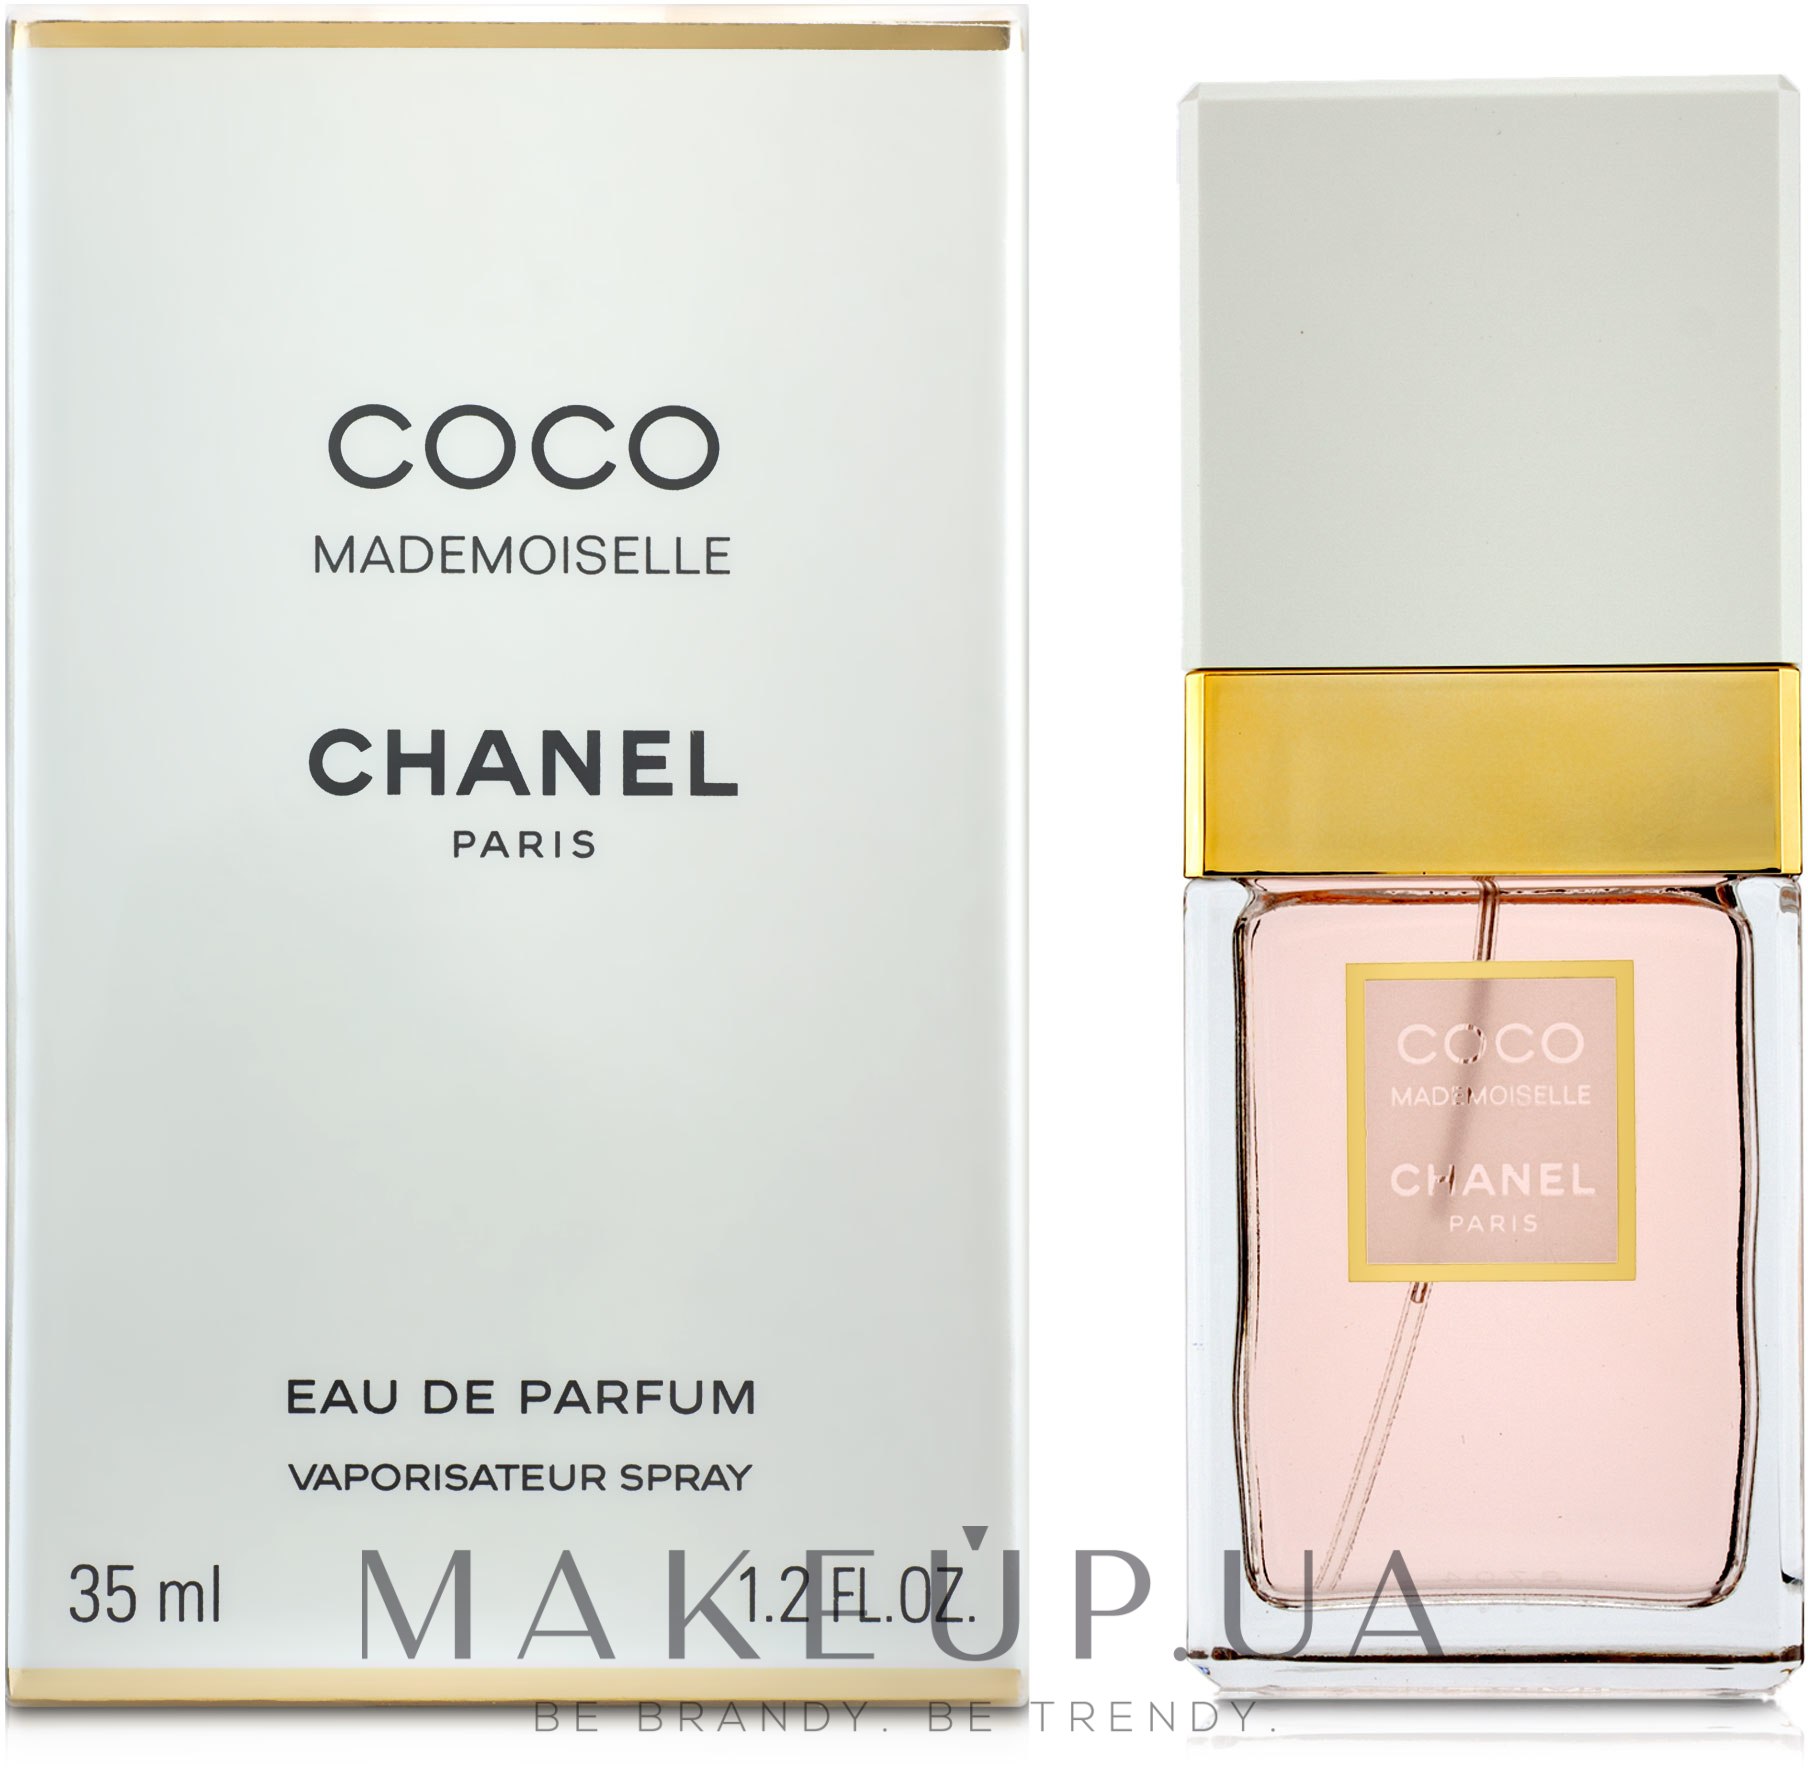 Mademoiselle chanel отзывы. Chanel - Coco Mademoiselle EDP 100мл. Coco Mademoiselle Chanel 50 ml. Coco Mademoiselle Chanel 100ml. Coco Mademoiselle Chanel 35 ml.